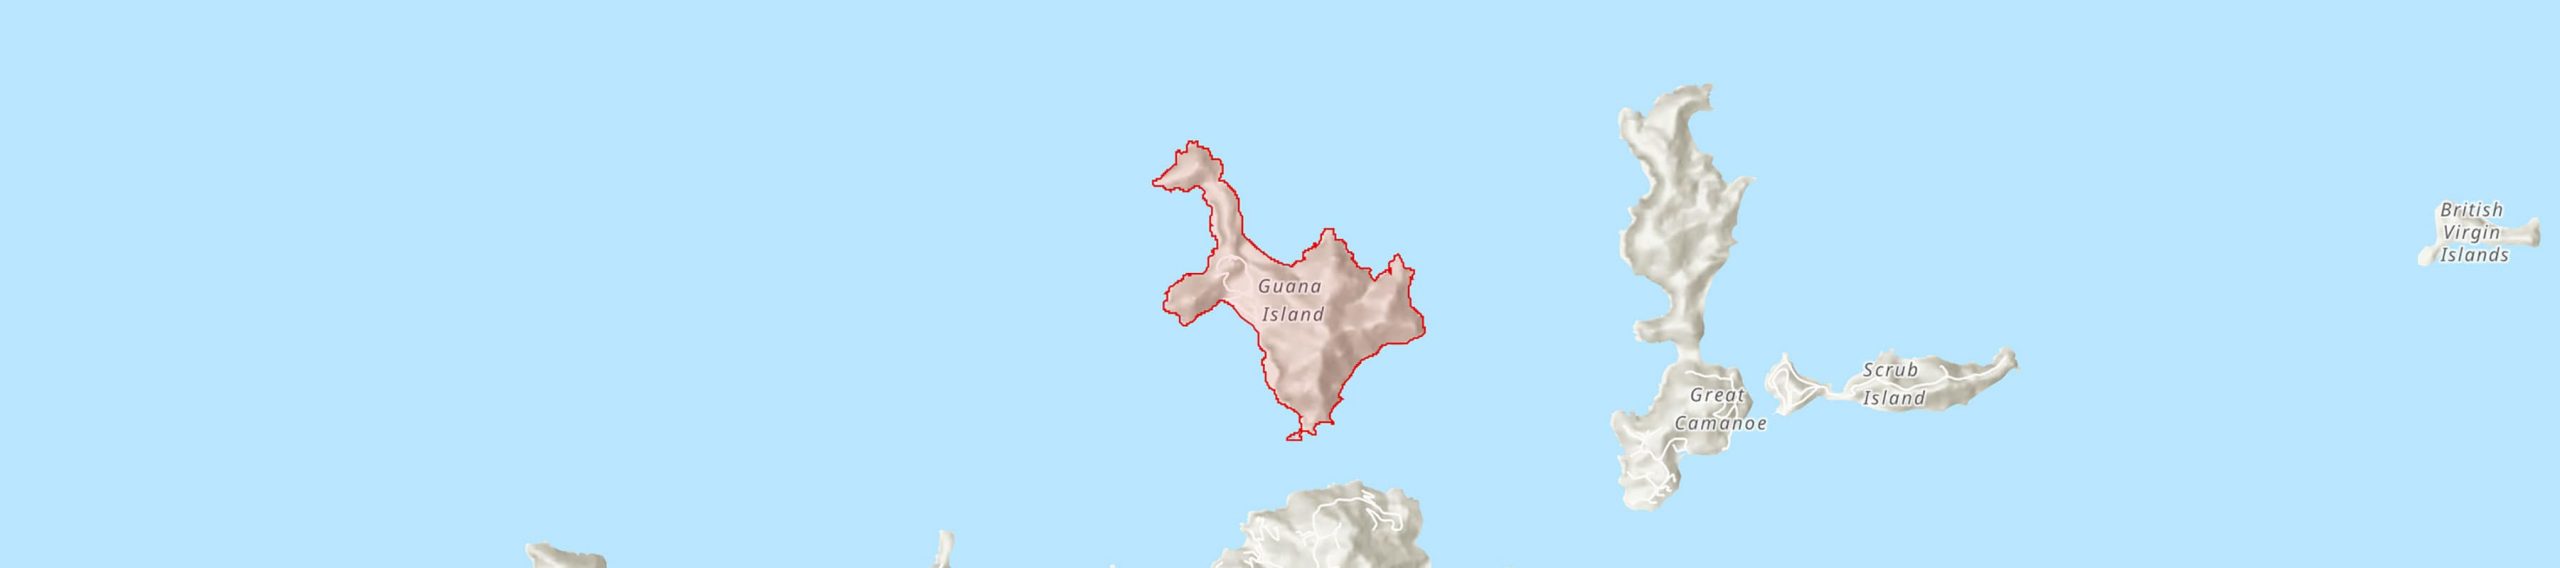 Guana island